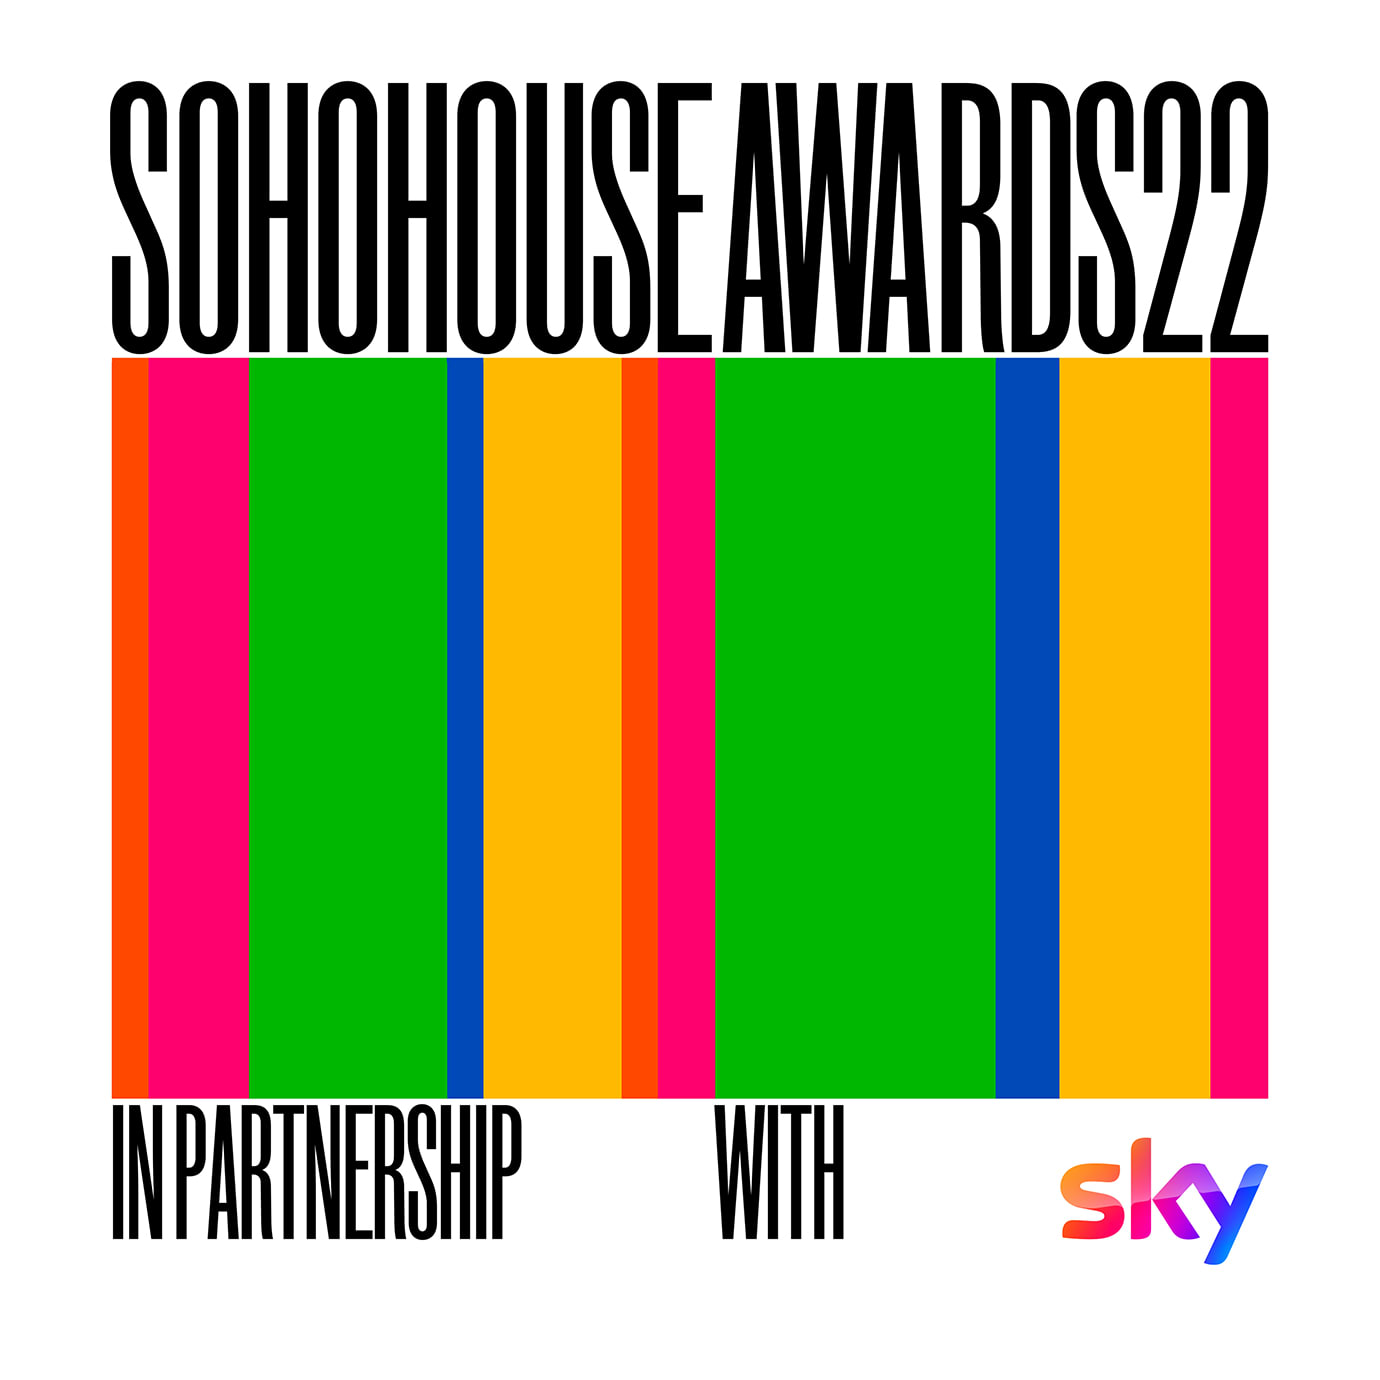 Soho House Announcing the Soho House Awards 2022